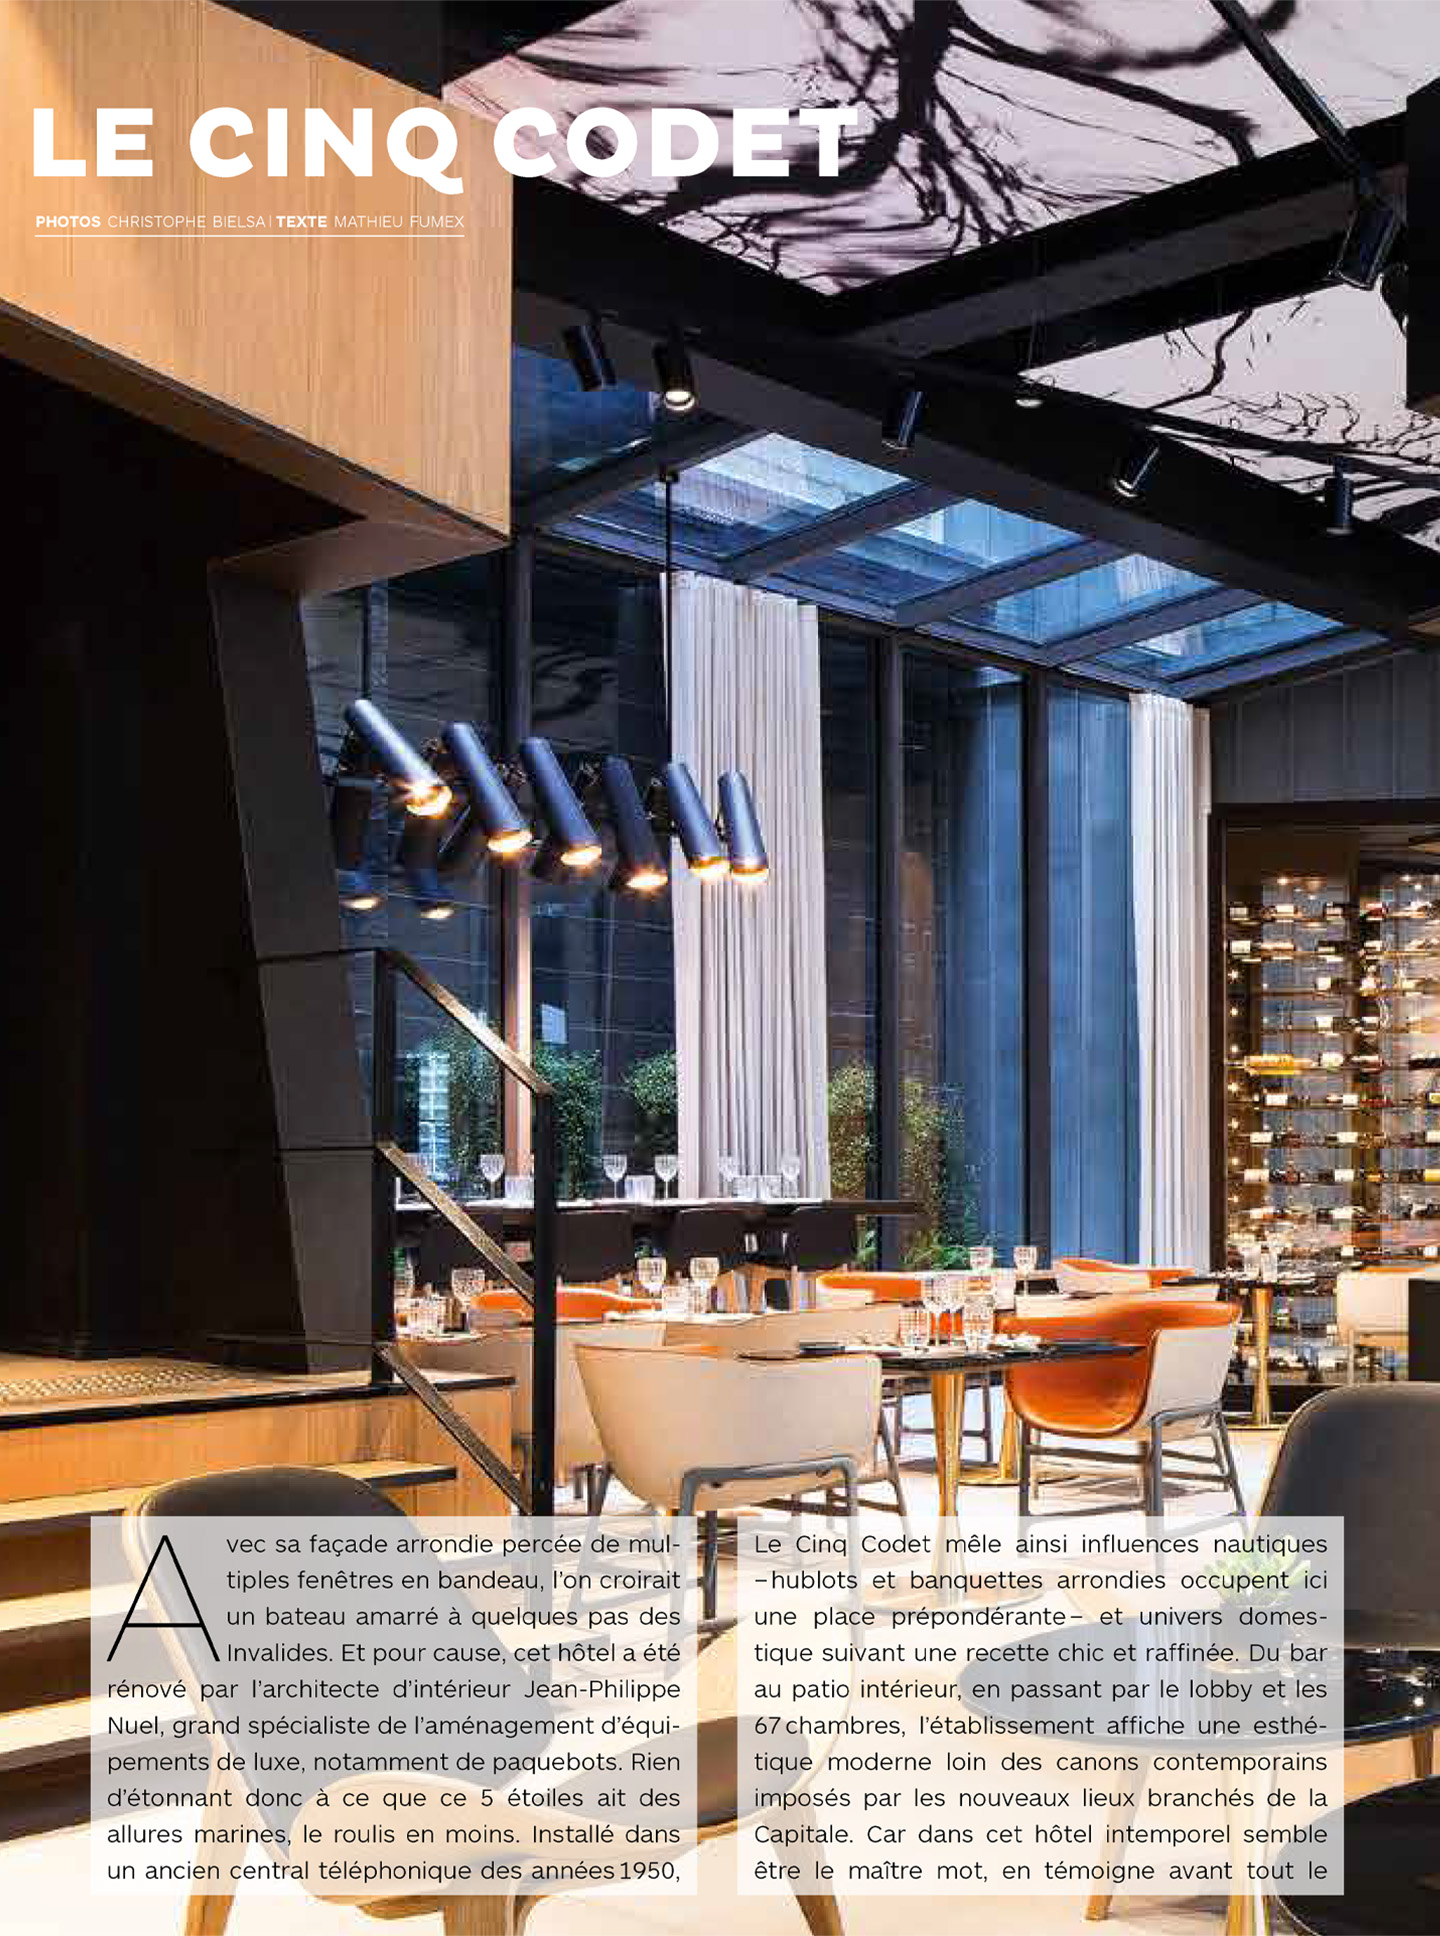 article on the parisian hotel le cinq codet designed by the interior design studio jean-philippe nuel